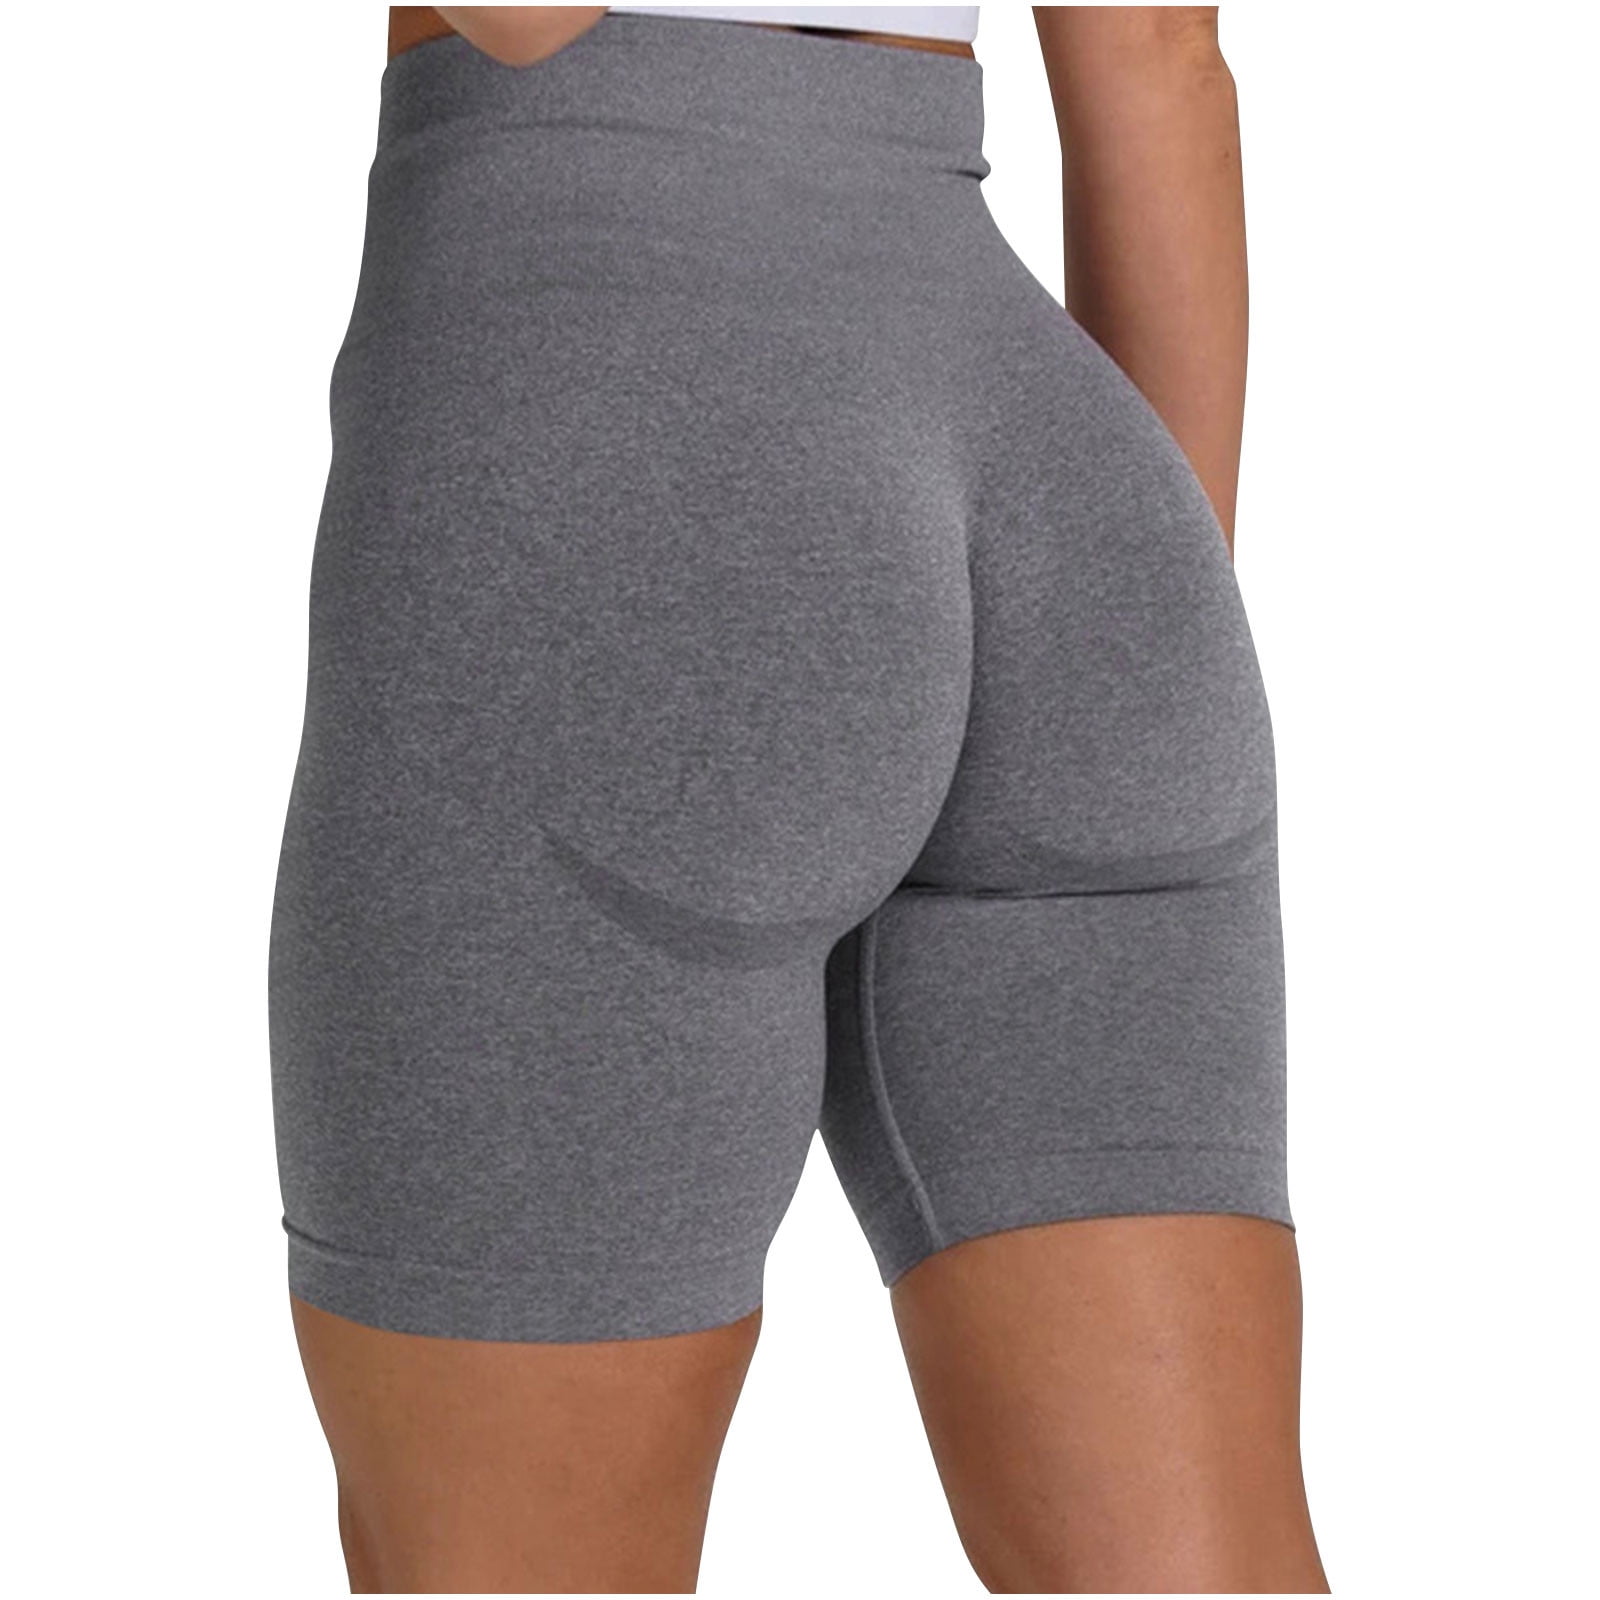 pasuxi women yoga shorts pants quick